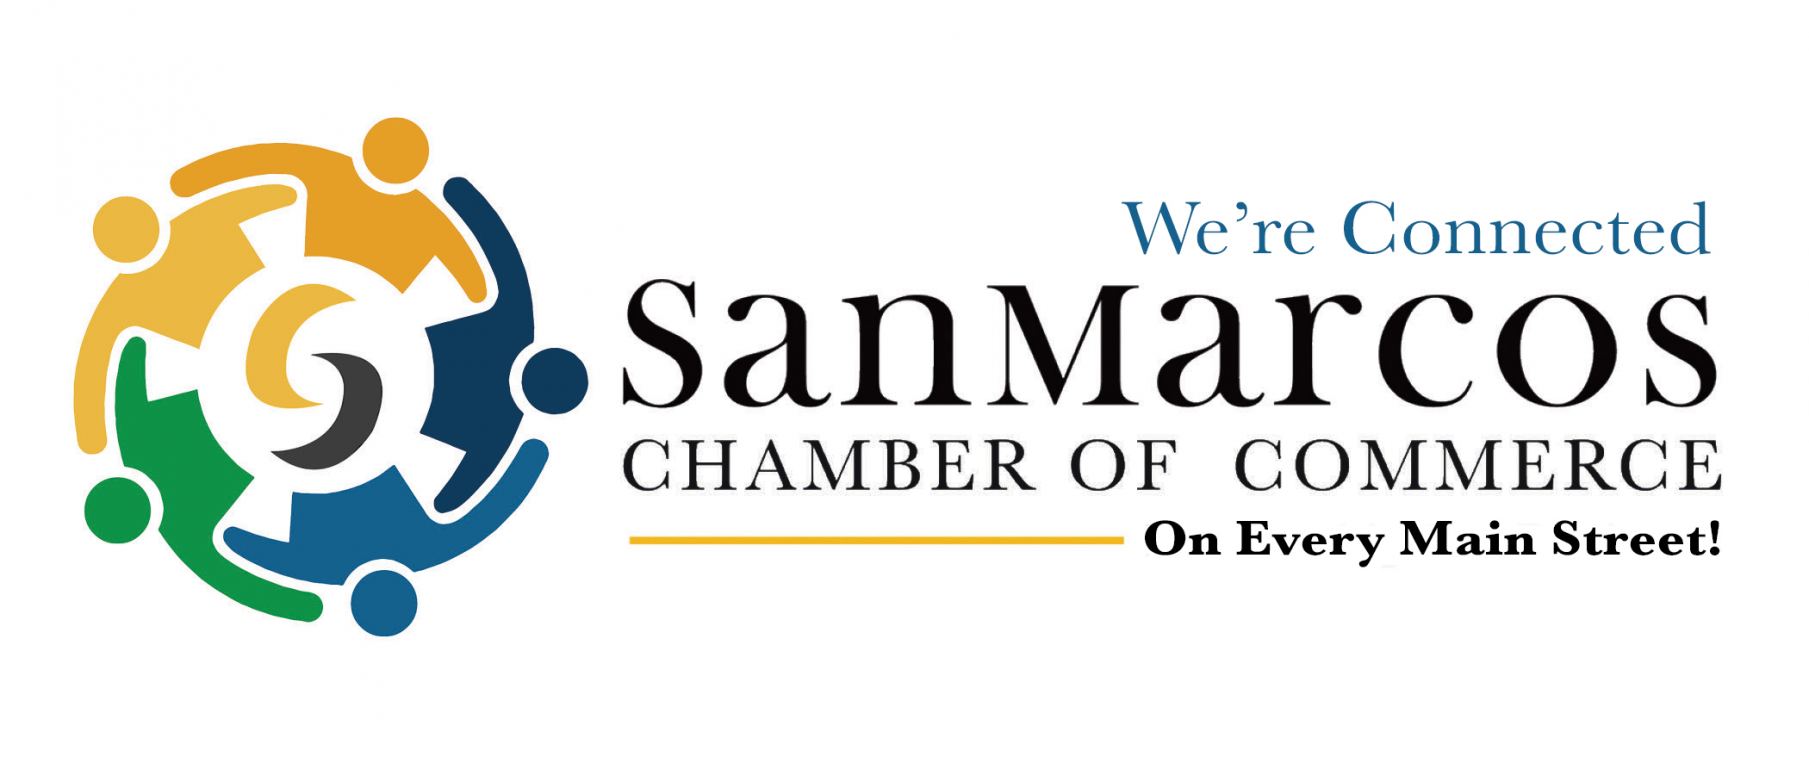 sanmarcoschamber Logo